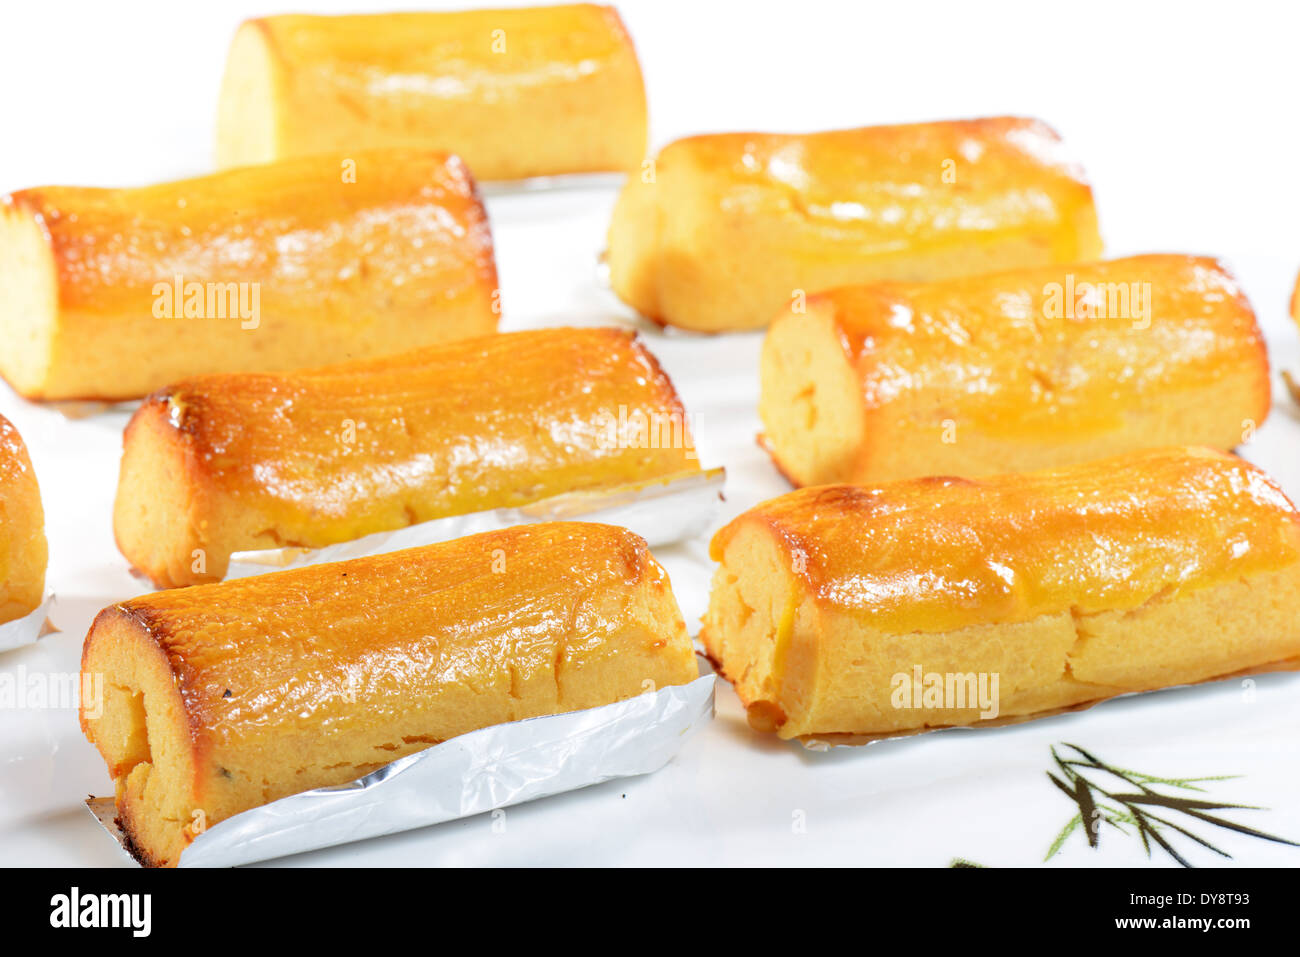 Chinese Food: Toasted sweet potato rolls Stock Photo